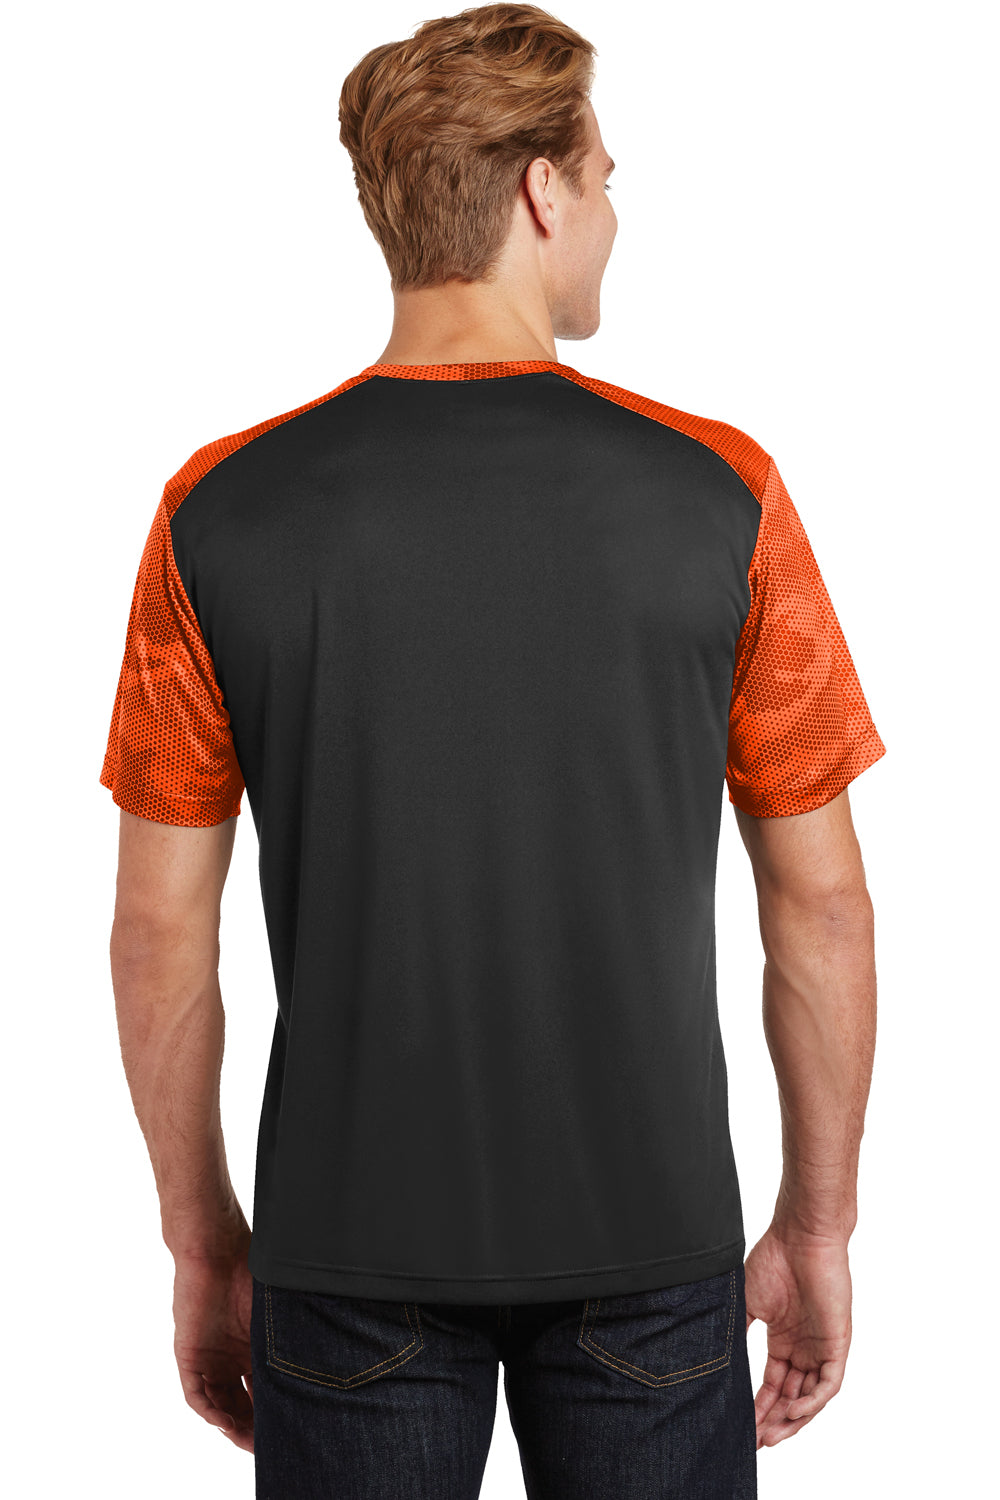 Sport-Tek ST371 Mens CamoHex Moisture Wicking Short Sleeve Crewneck T-Shirt Black/Orange Back